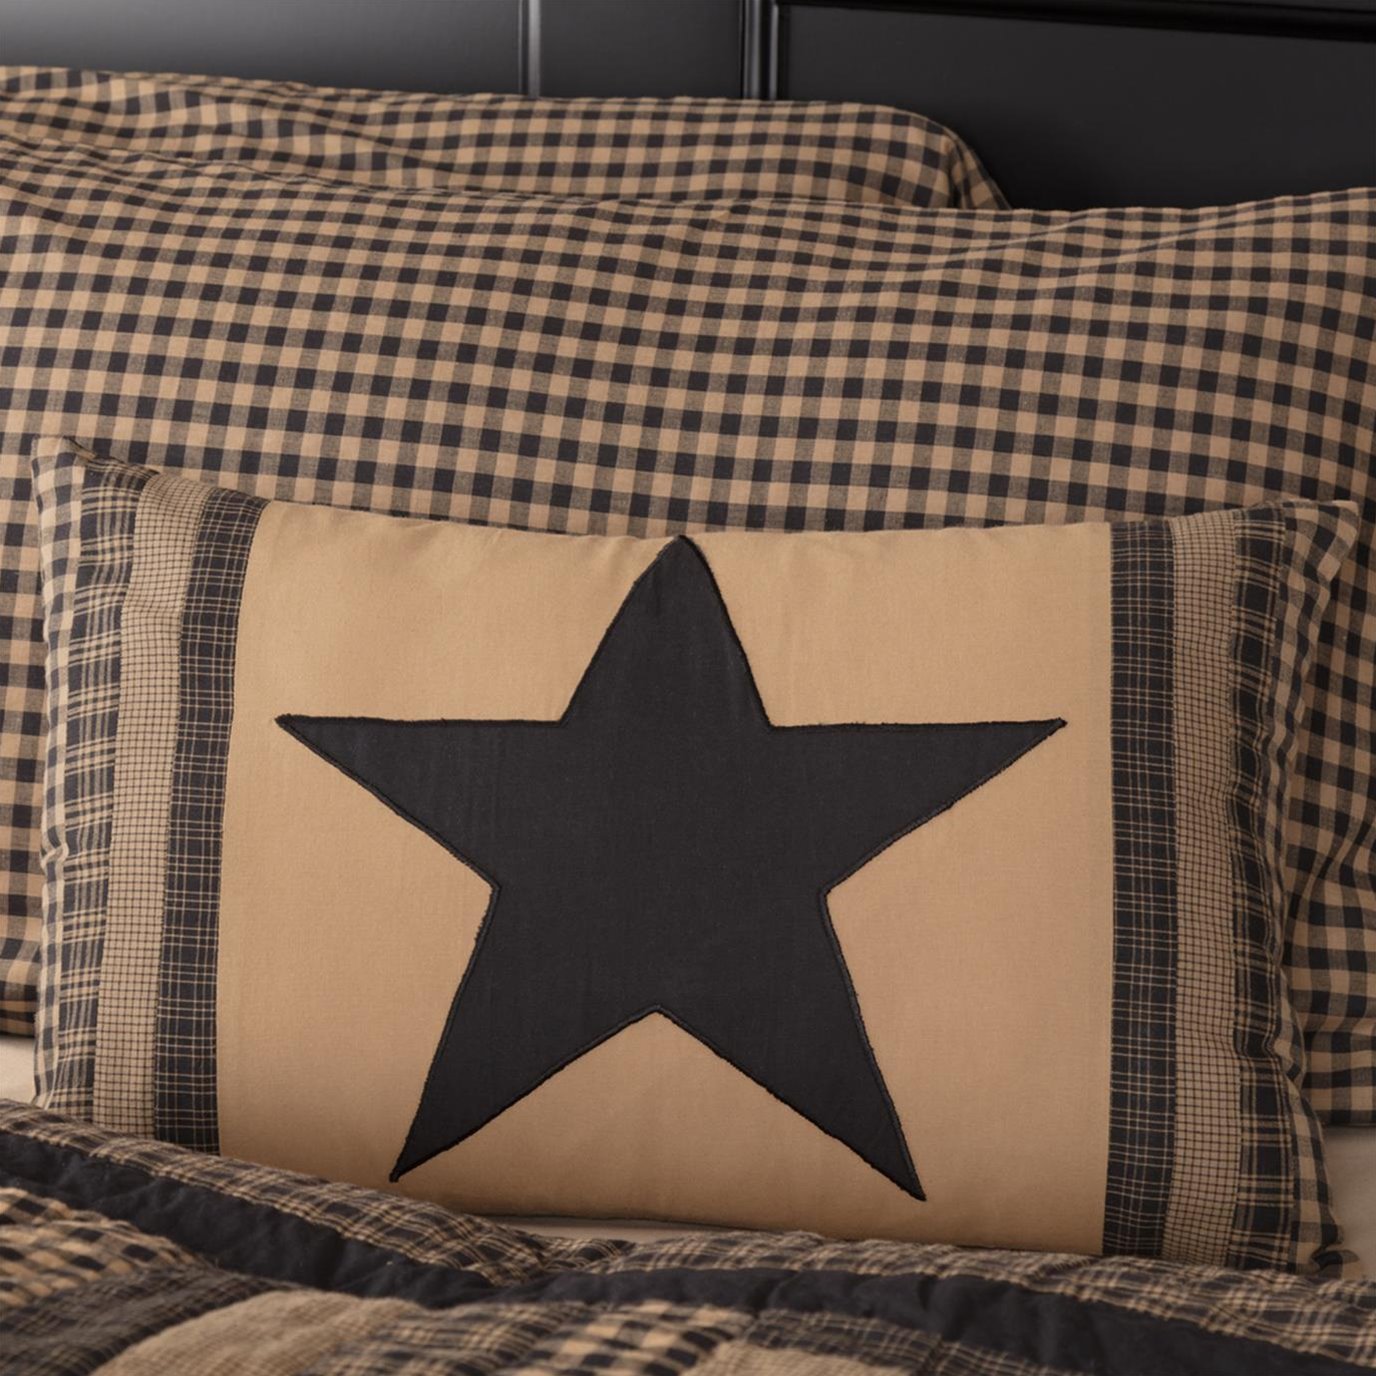 Black Check Star Patch Pillow 14x22